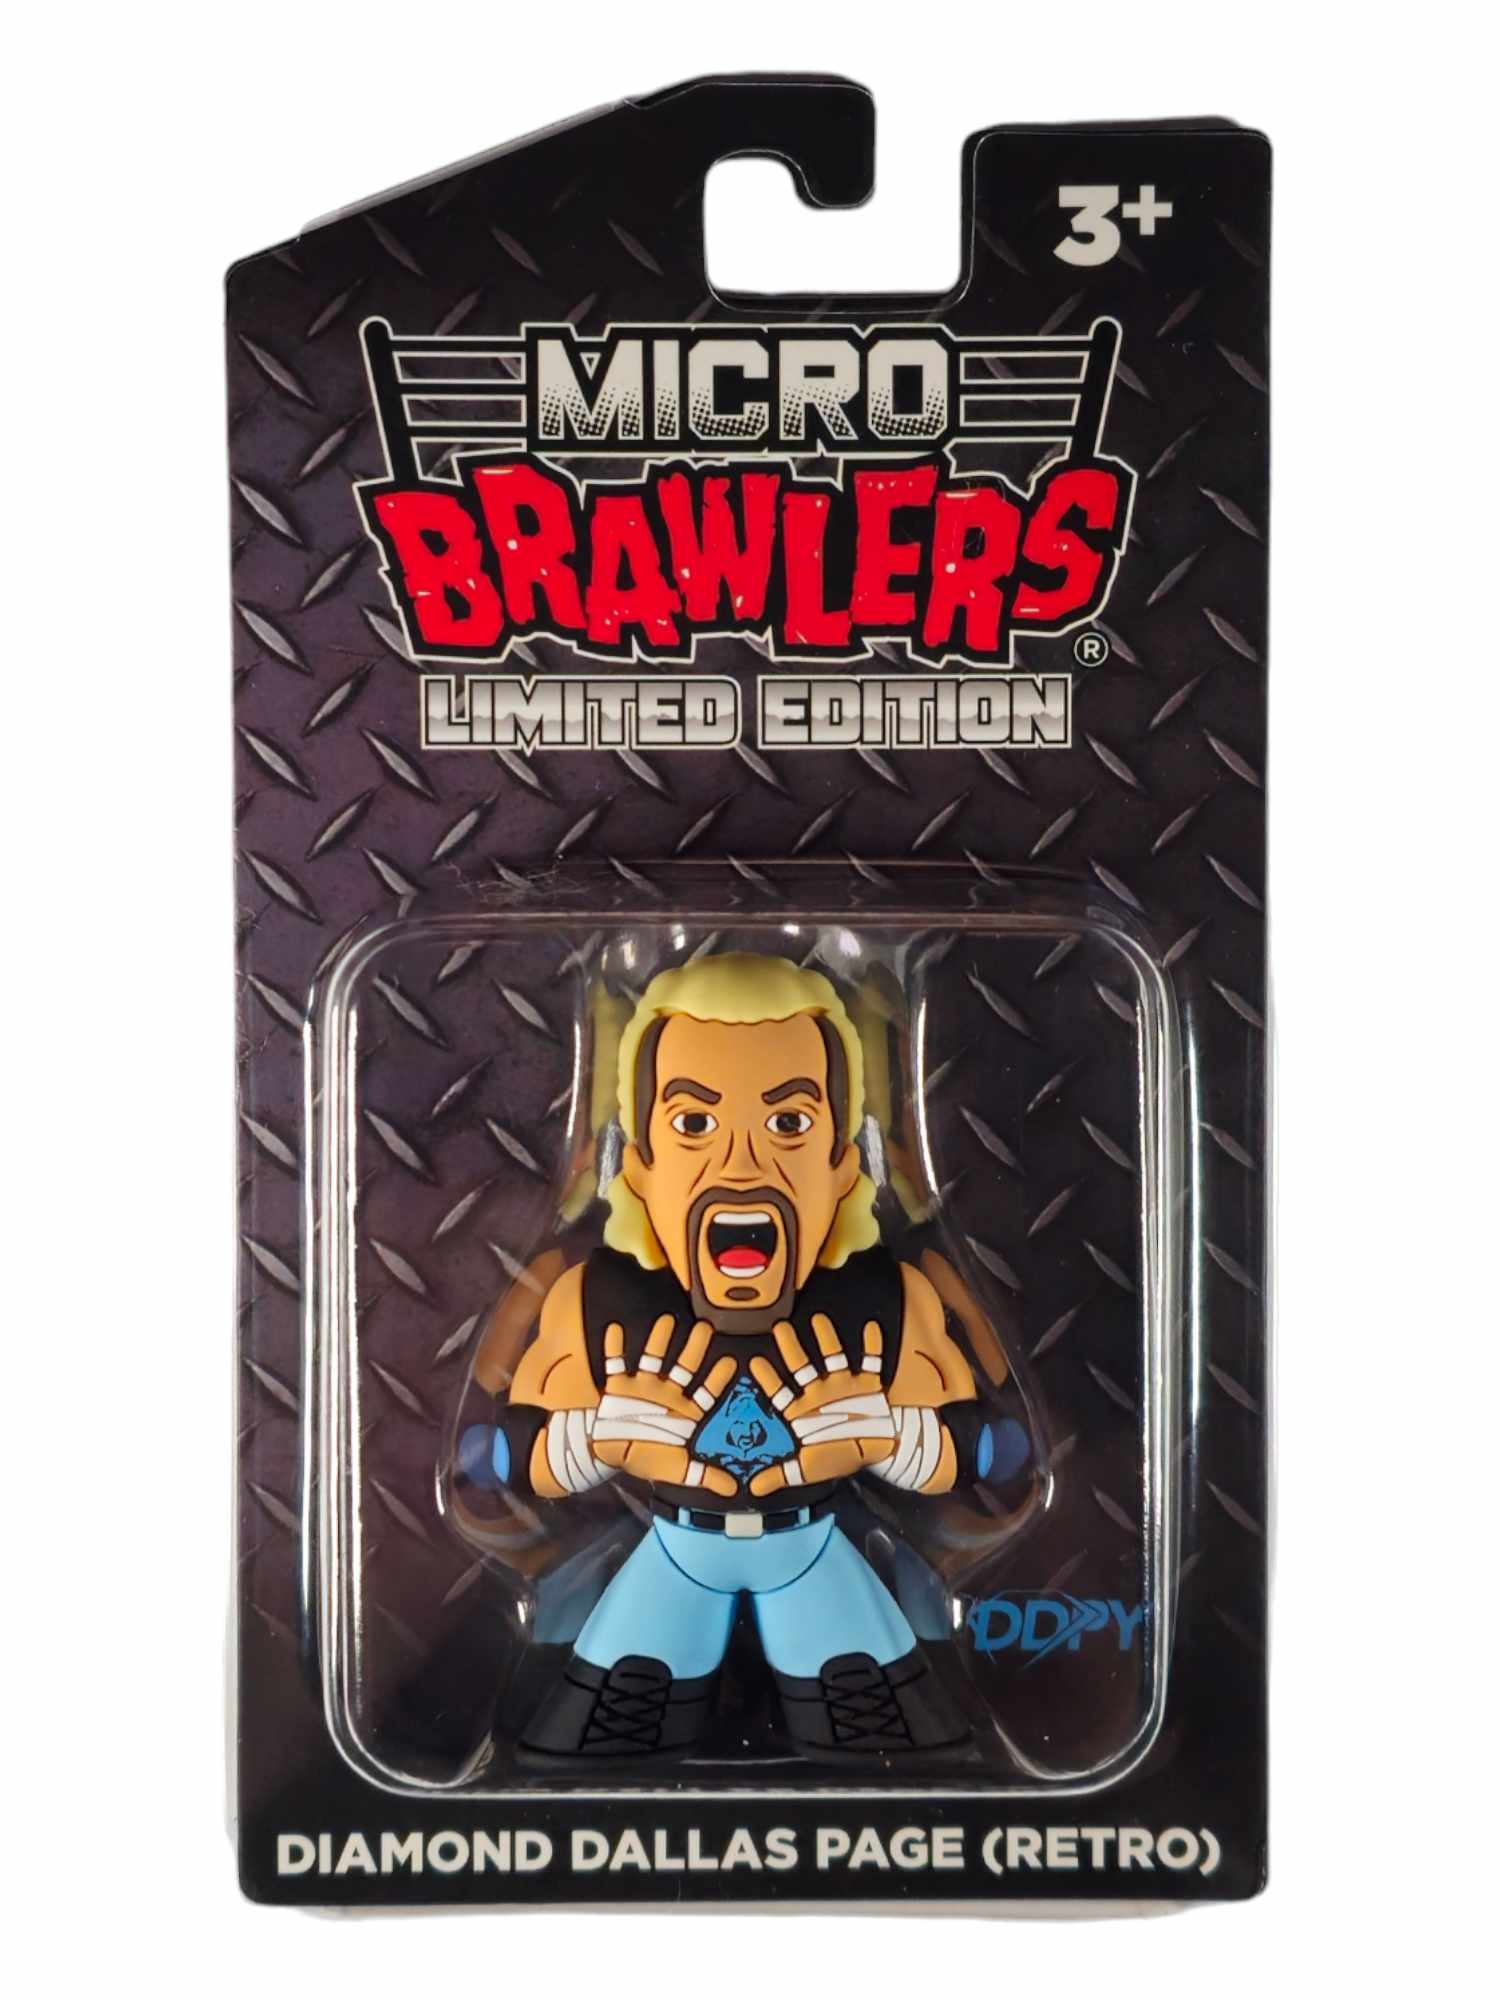 Taz - Micro Brawler Wrestling Pin